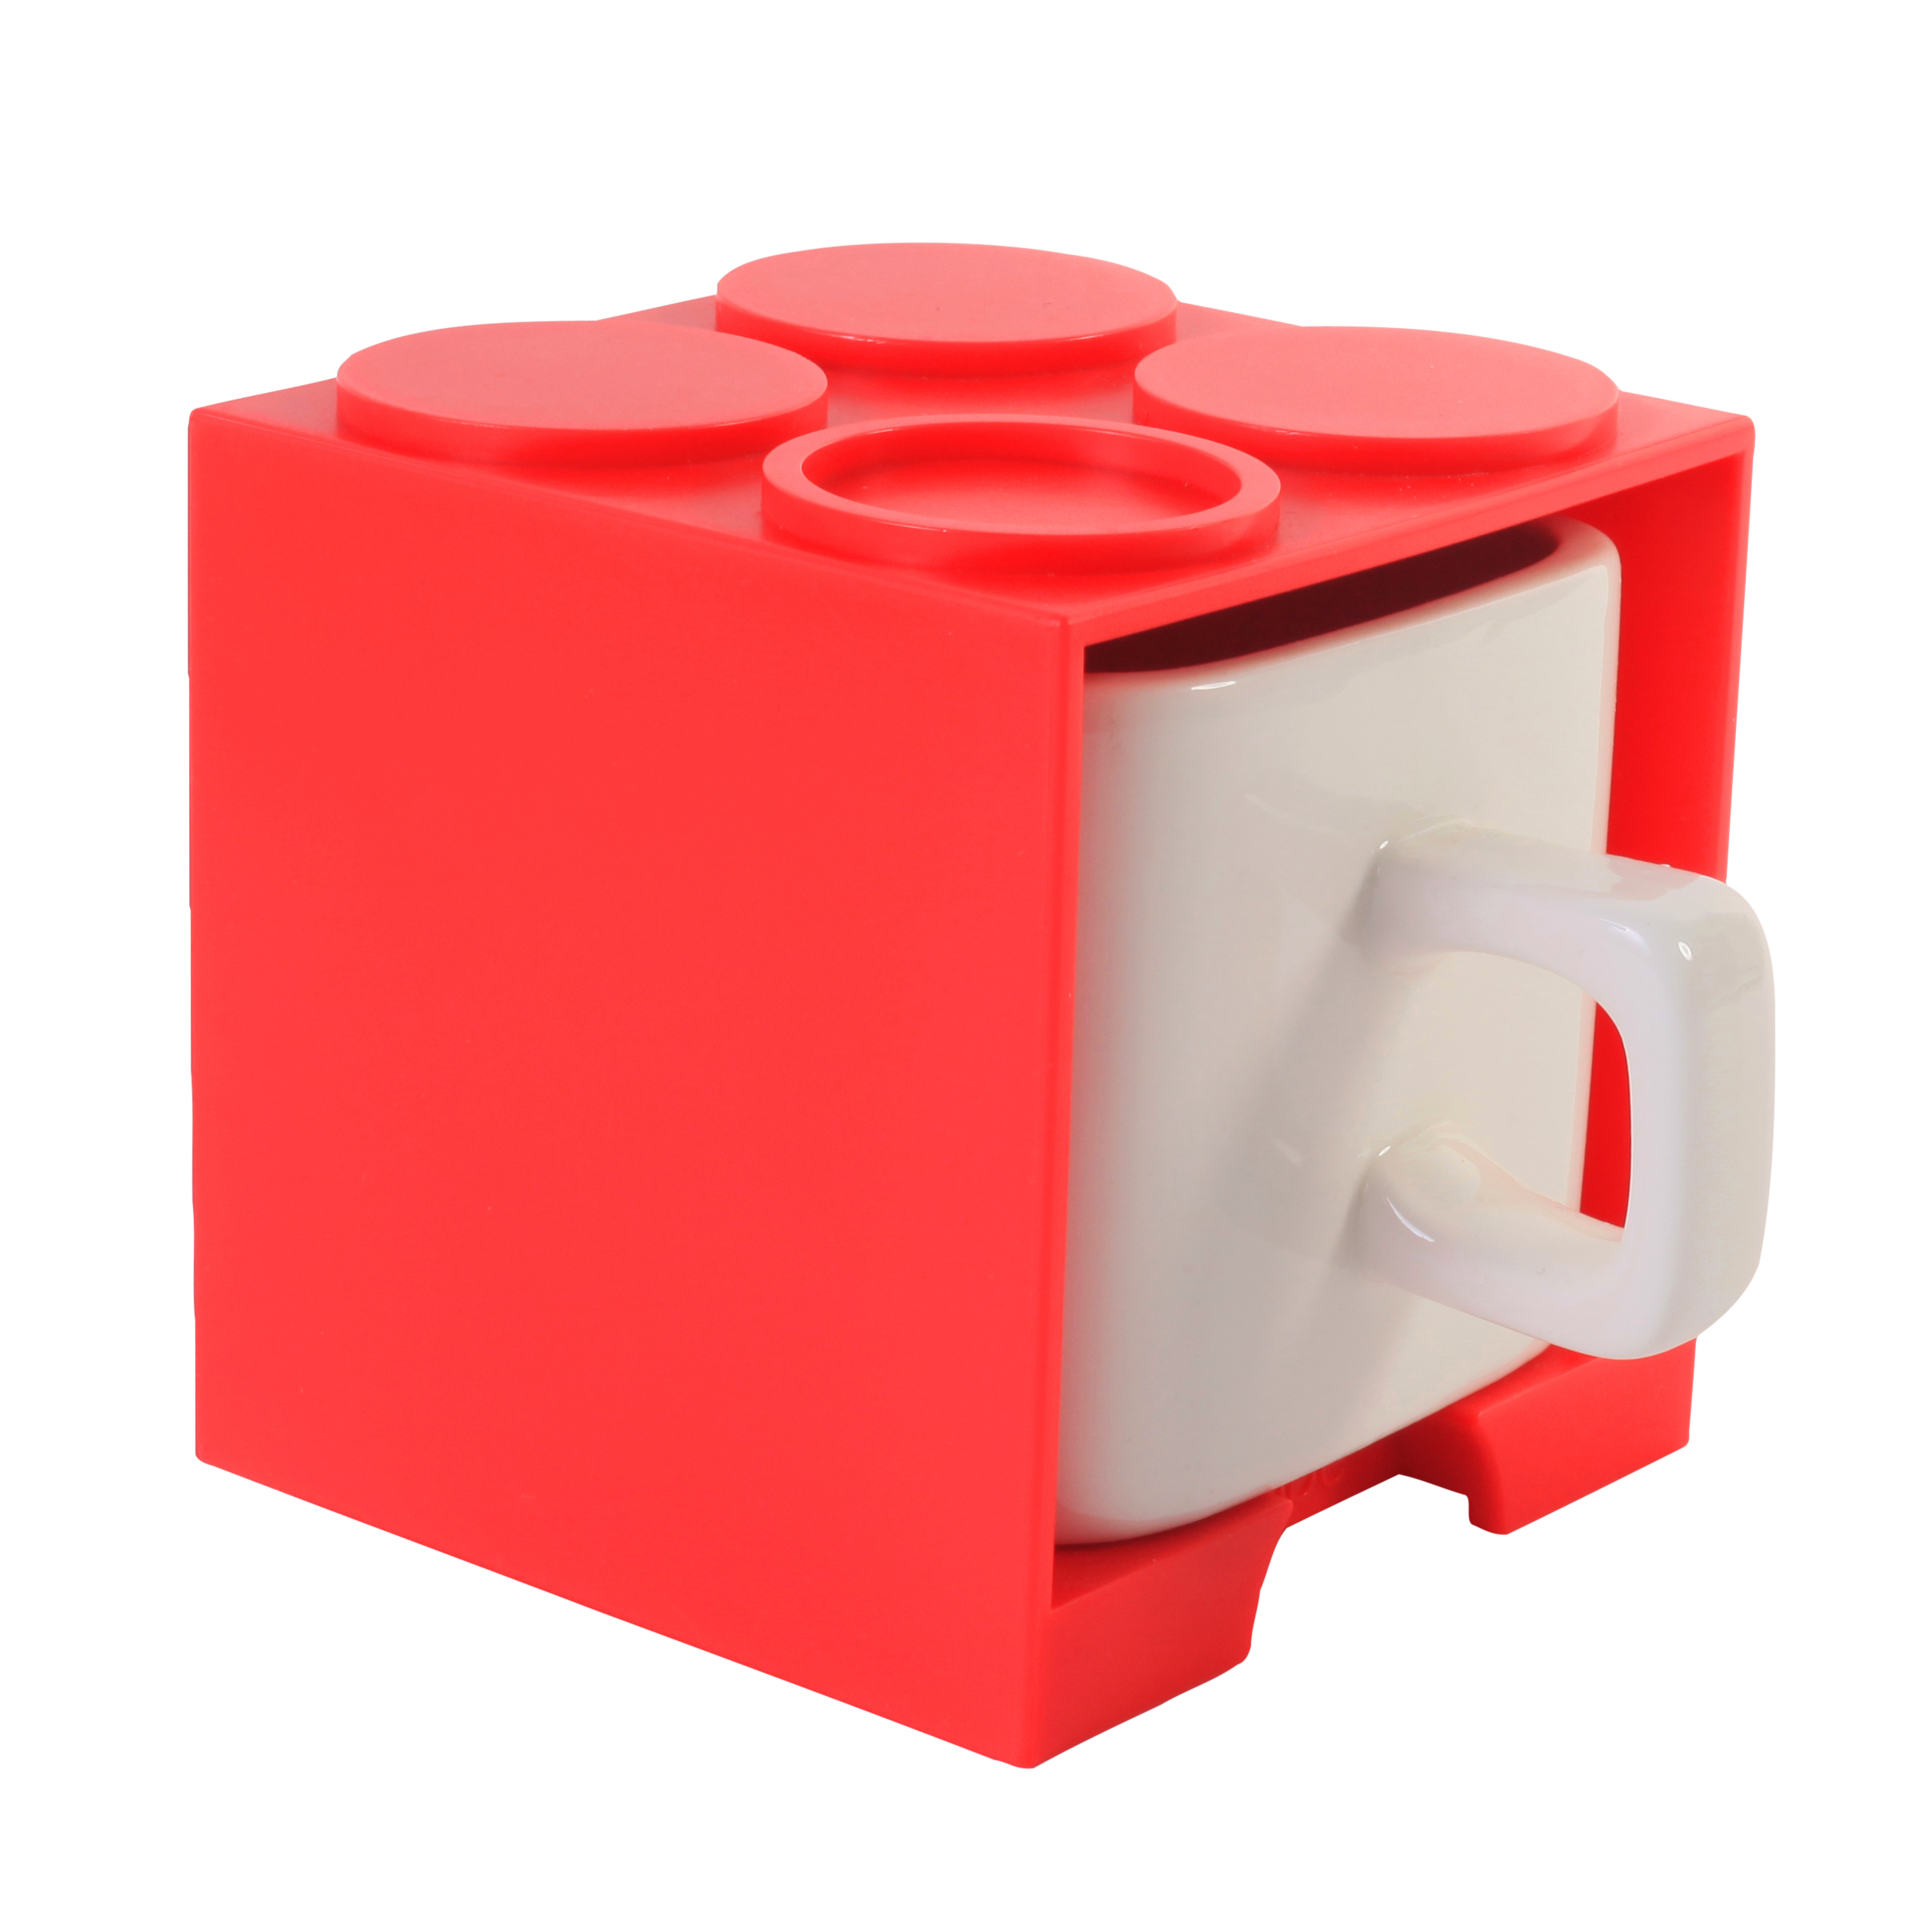 3750-cube-mug-red